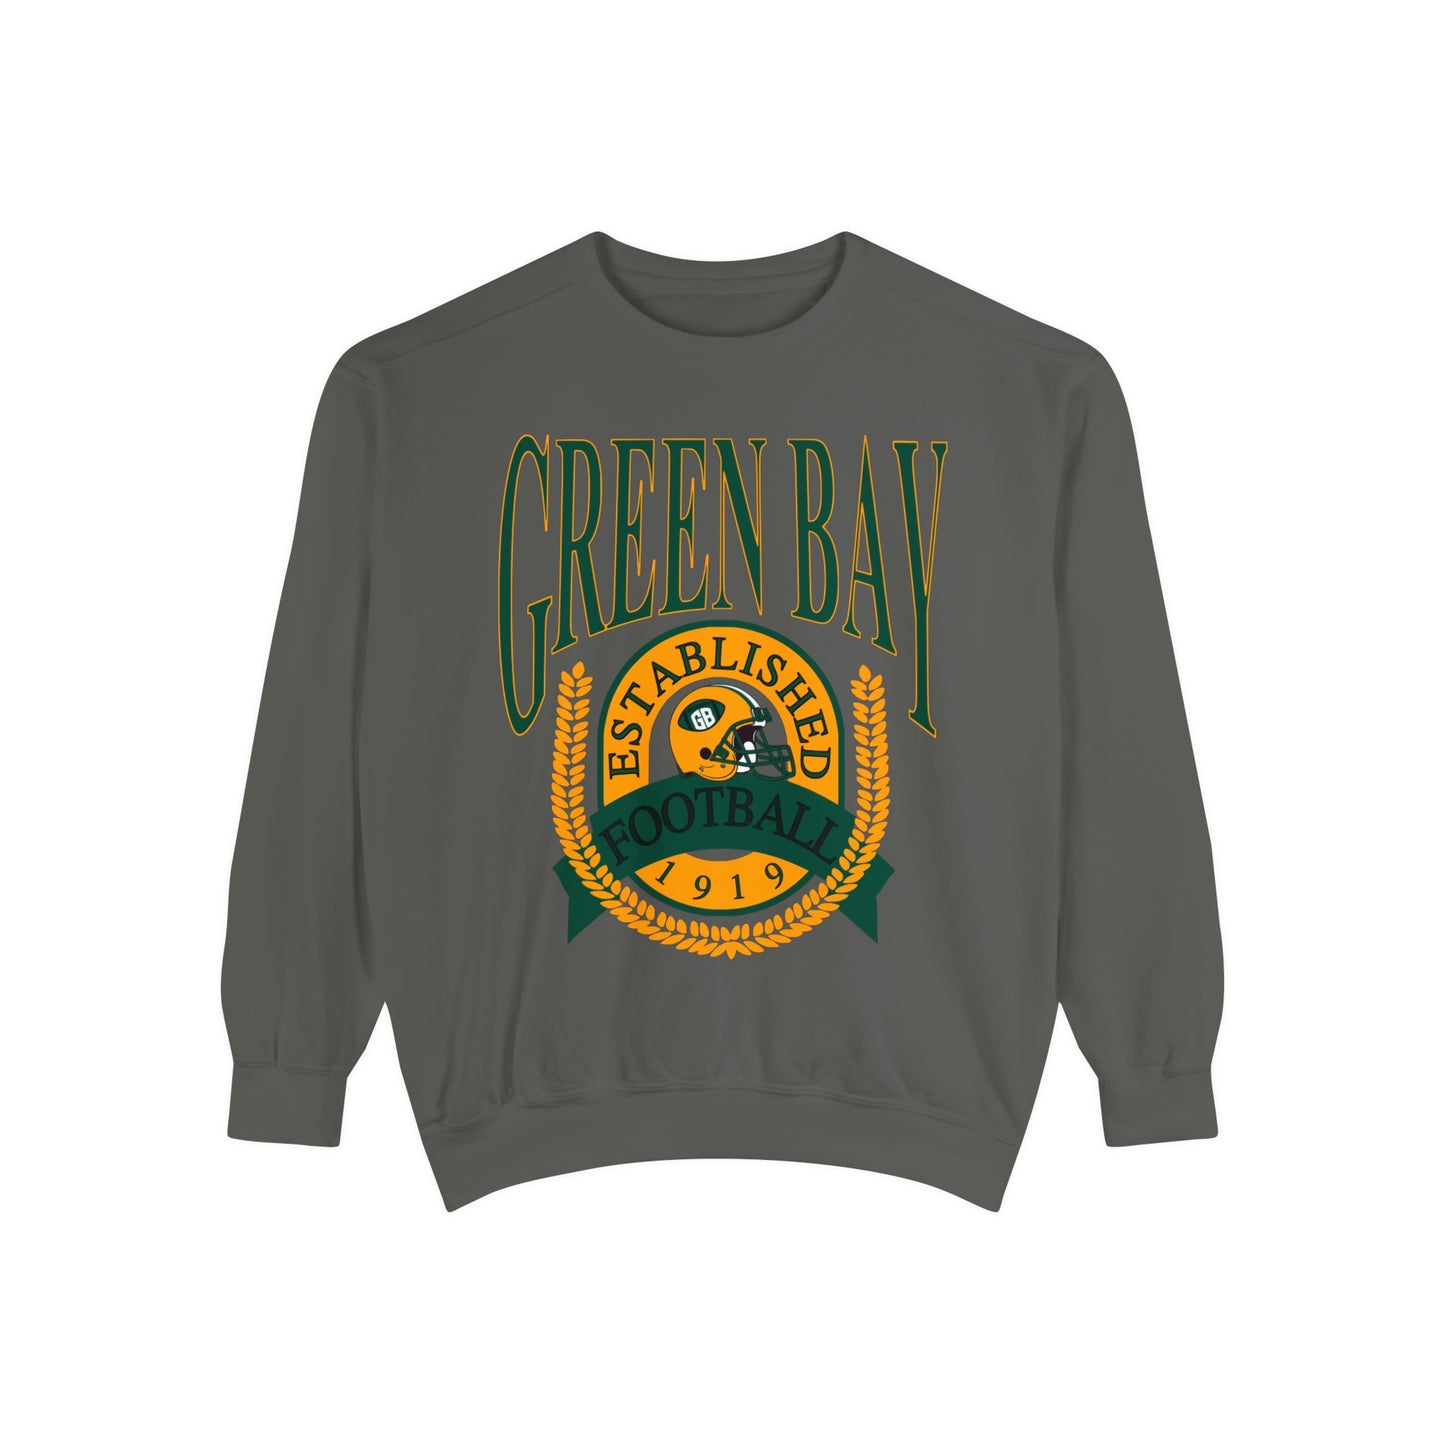 Comfort Colors Throwback Green Bay Packers Football Sweatshirt - Vintage Retro Crewneck - Men's Women's Hoodie Design 1